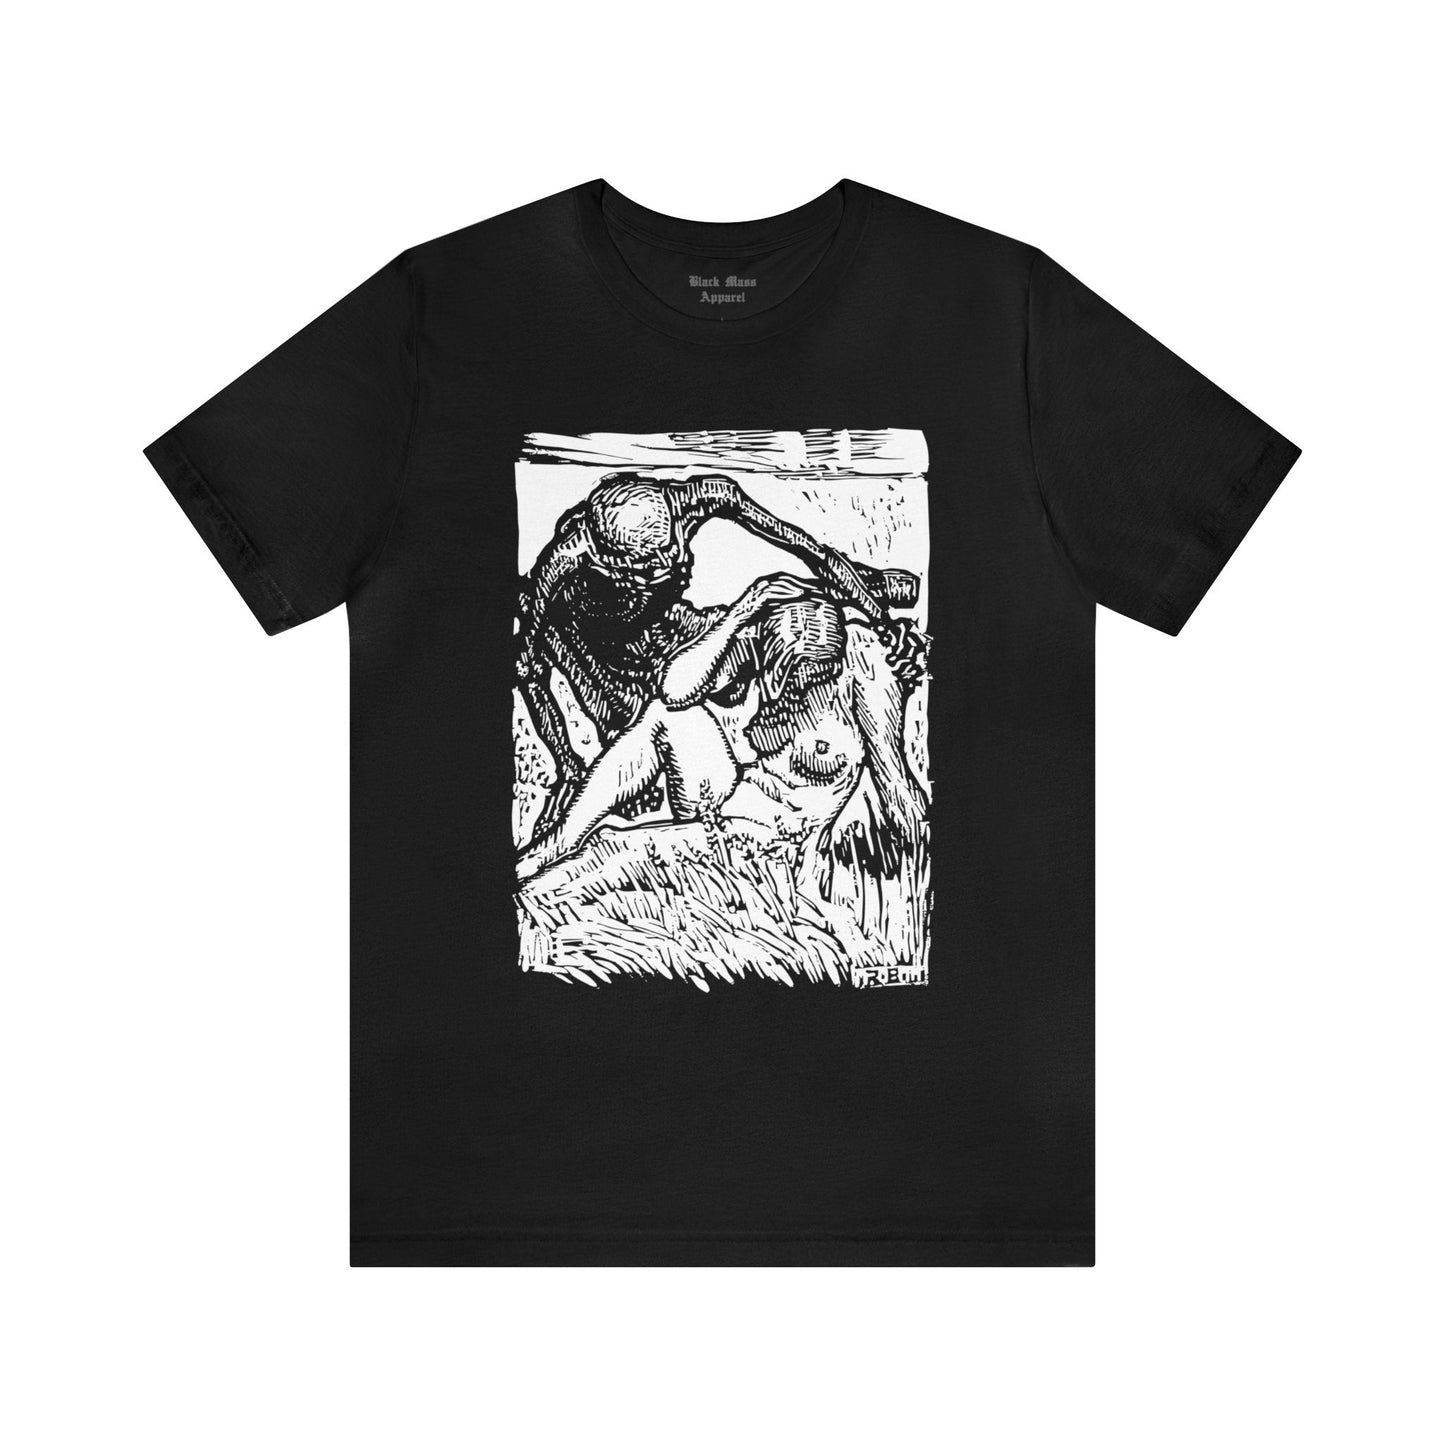 Totentanz II - Black Mass Apparel - T-Shirt